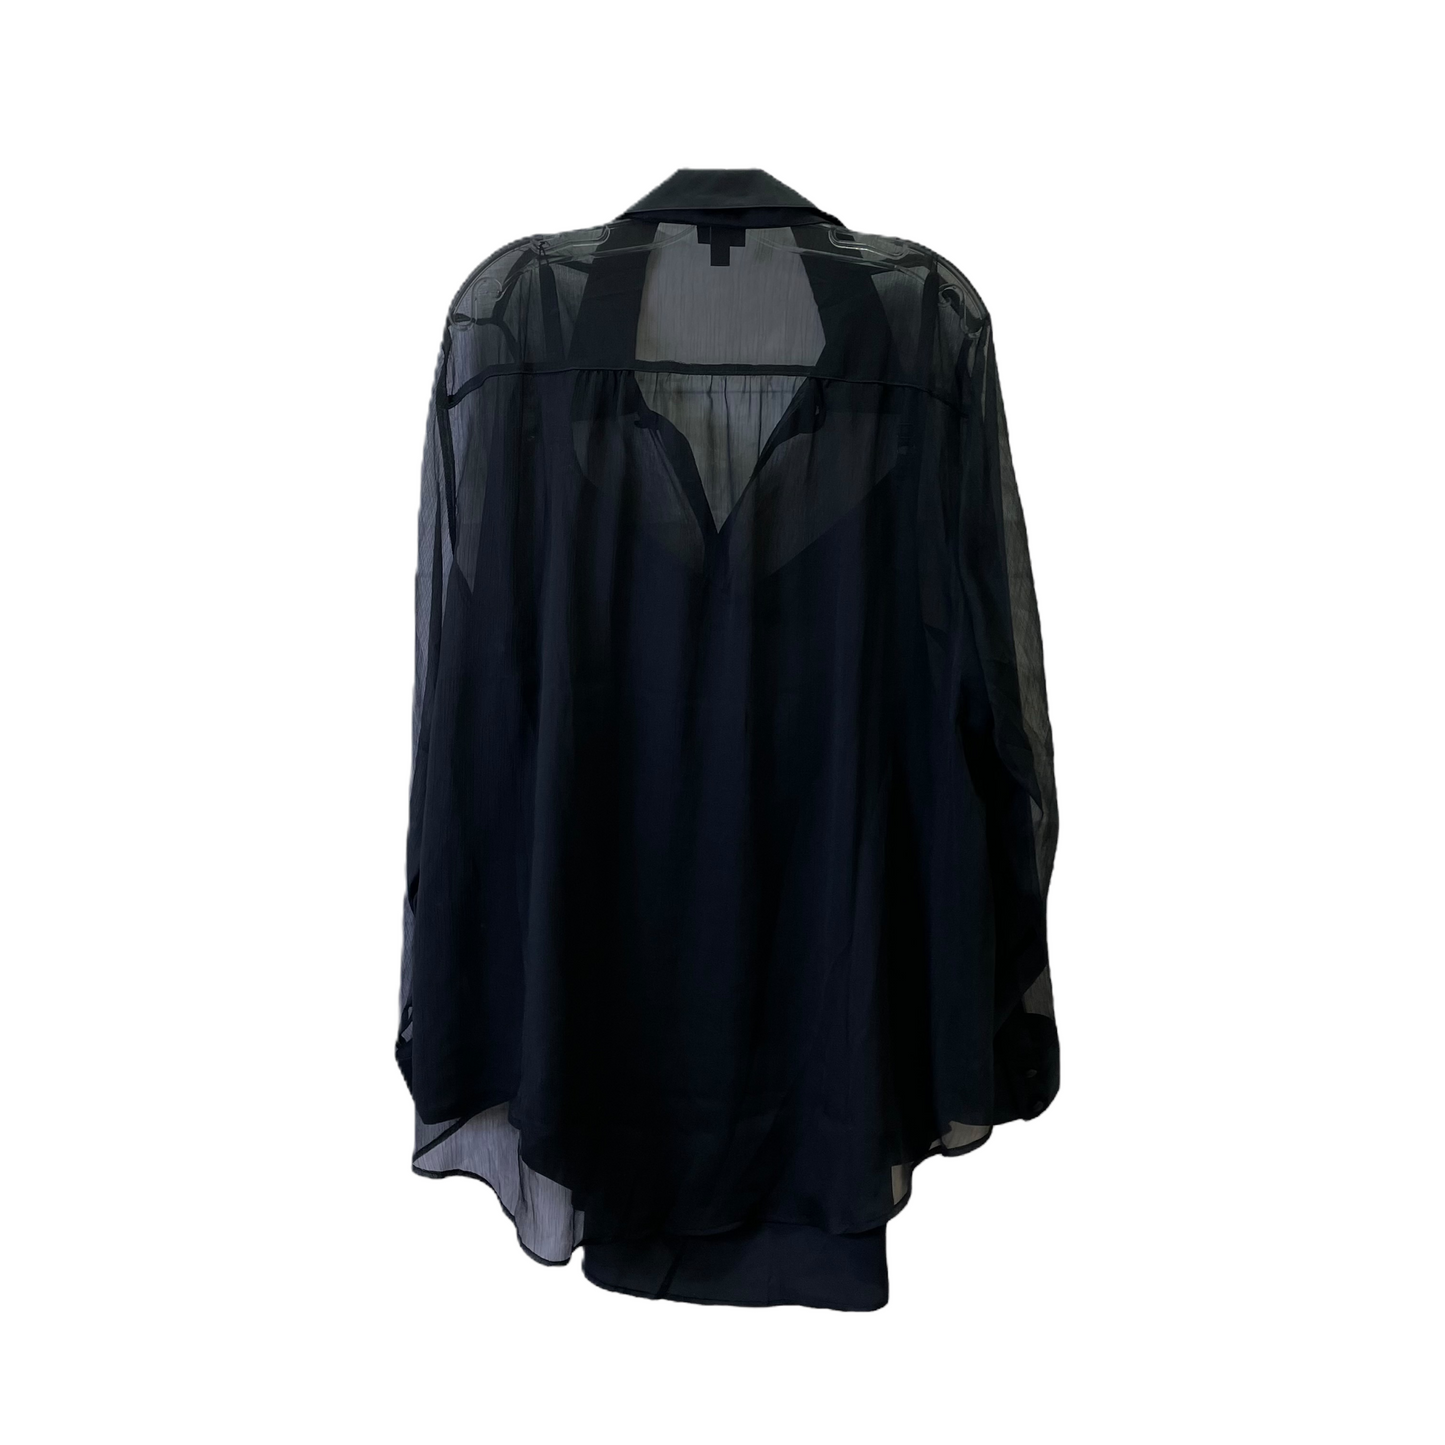 Black Blouse Long Sleeve By Torrid, Size: 2x